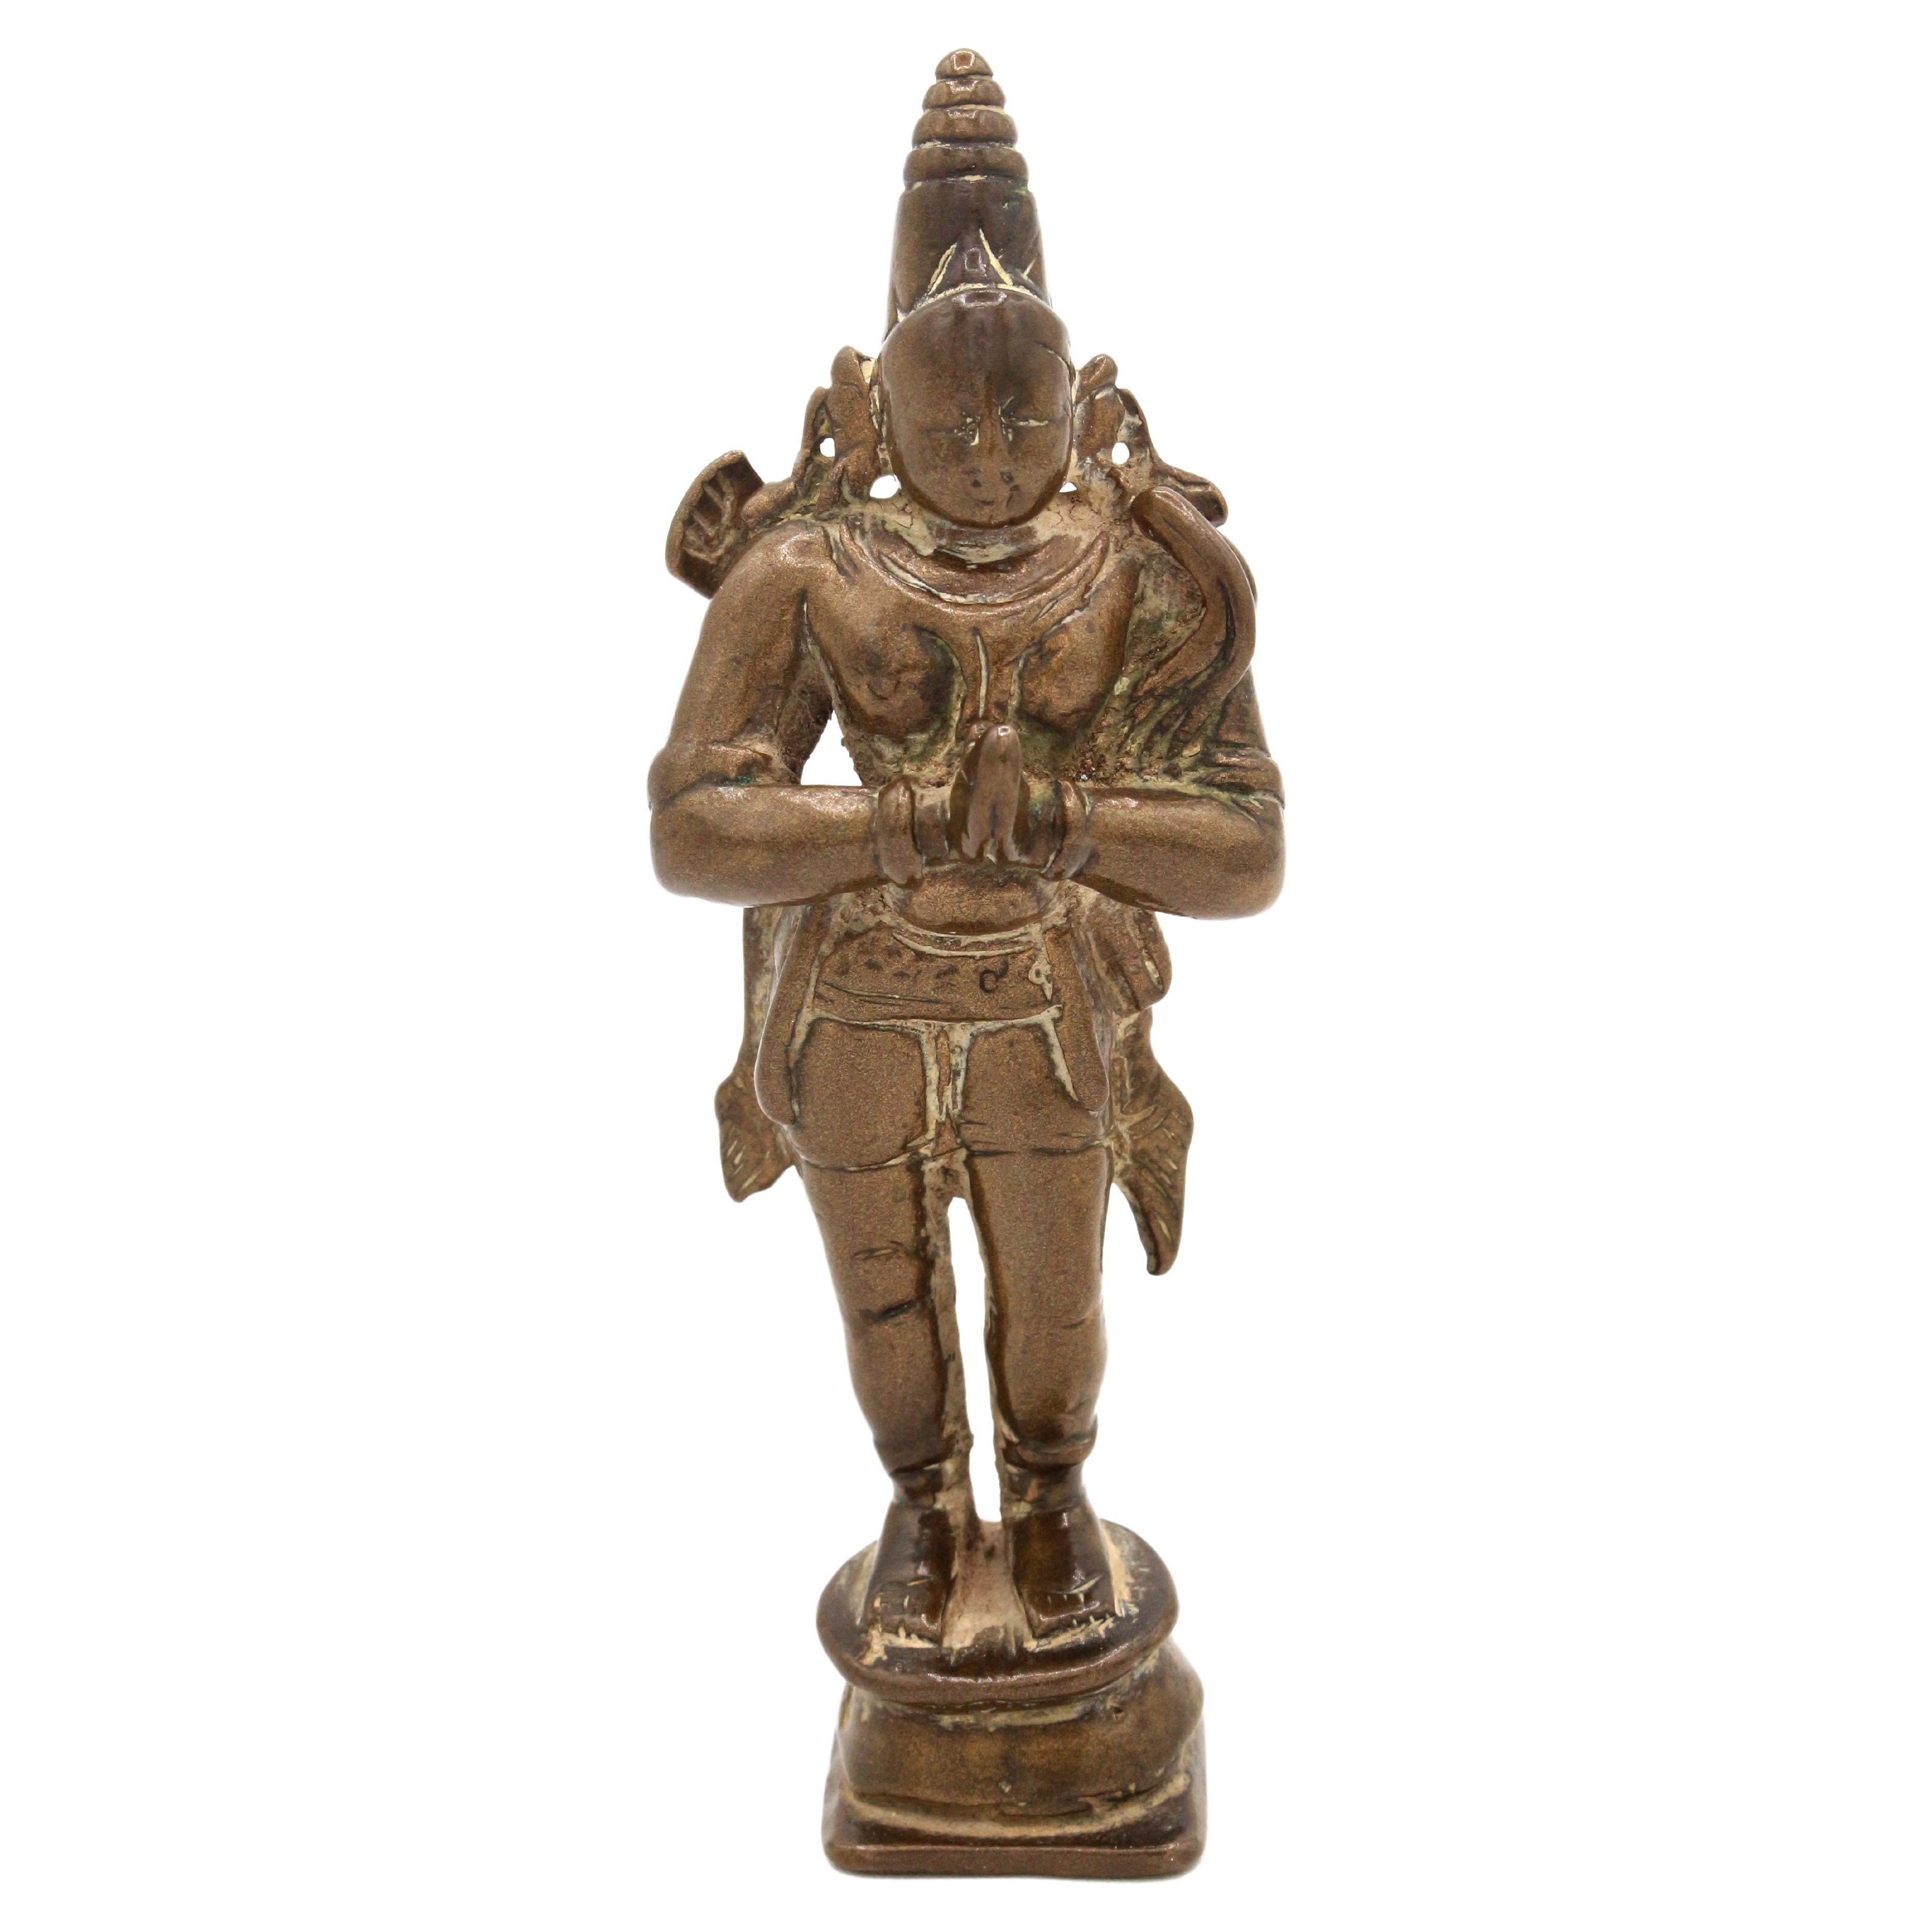 19th Century Small Serene Bronze Hindu God Statue